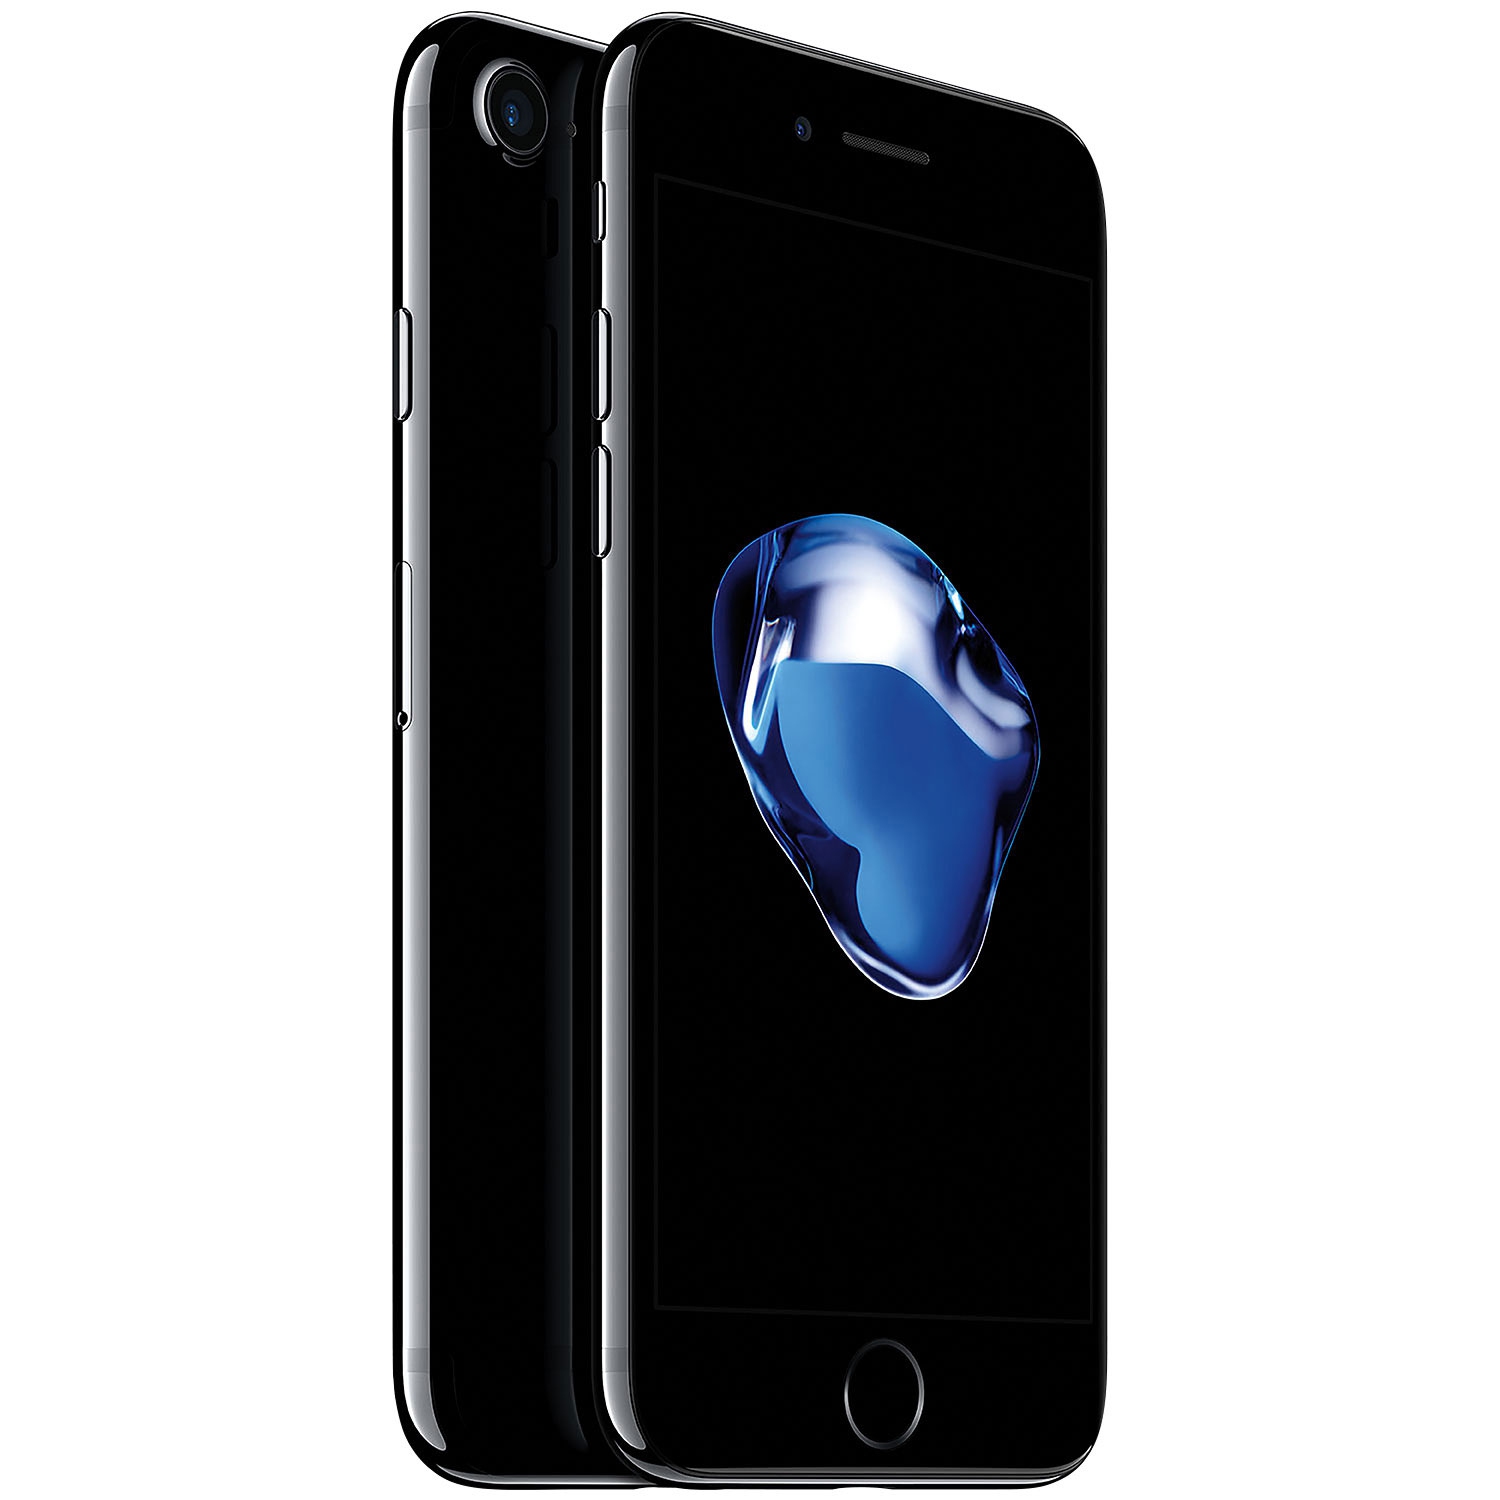 Refurbished (Good) - Apple iPhone 7 32GB Smartphone - Jet Black - Unlocked